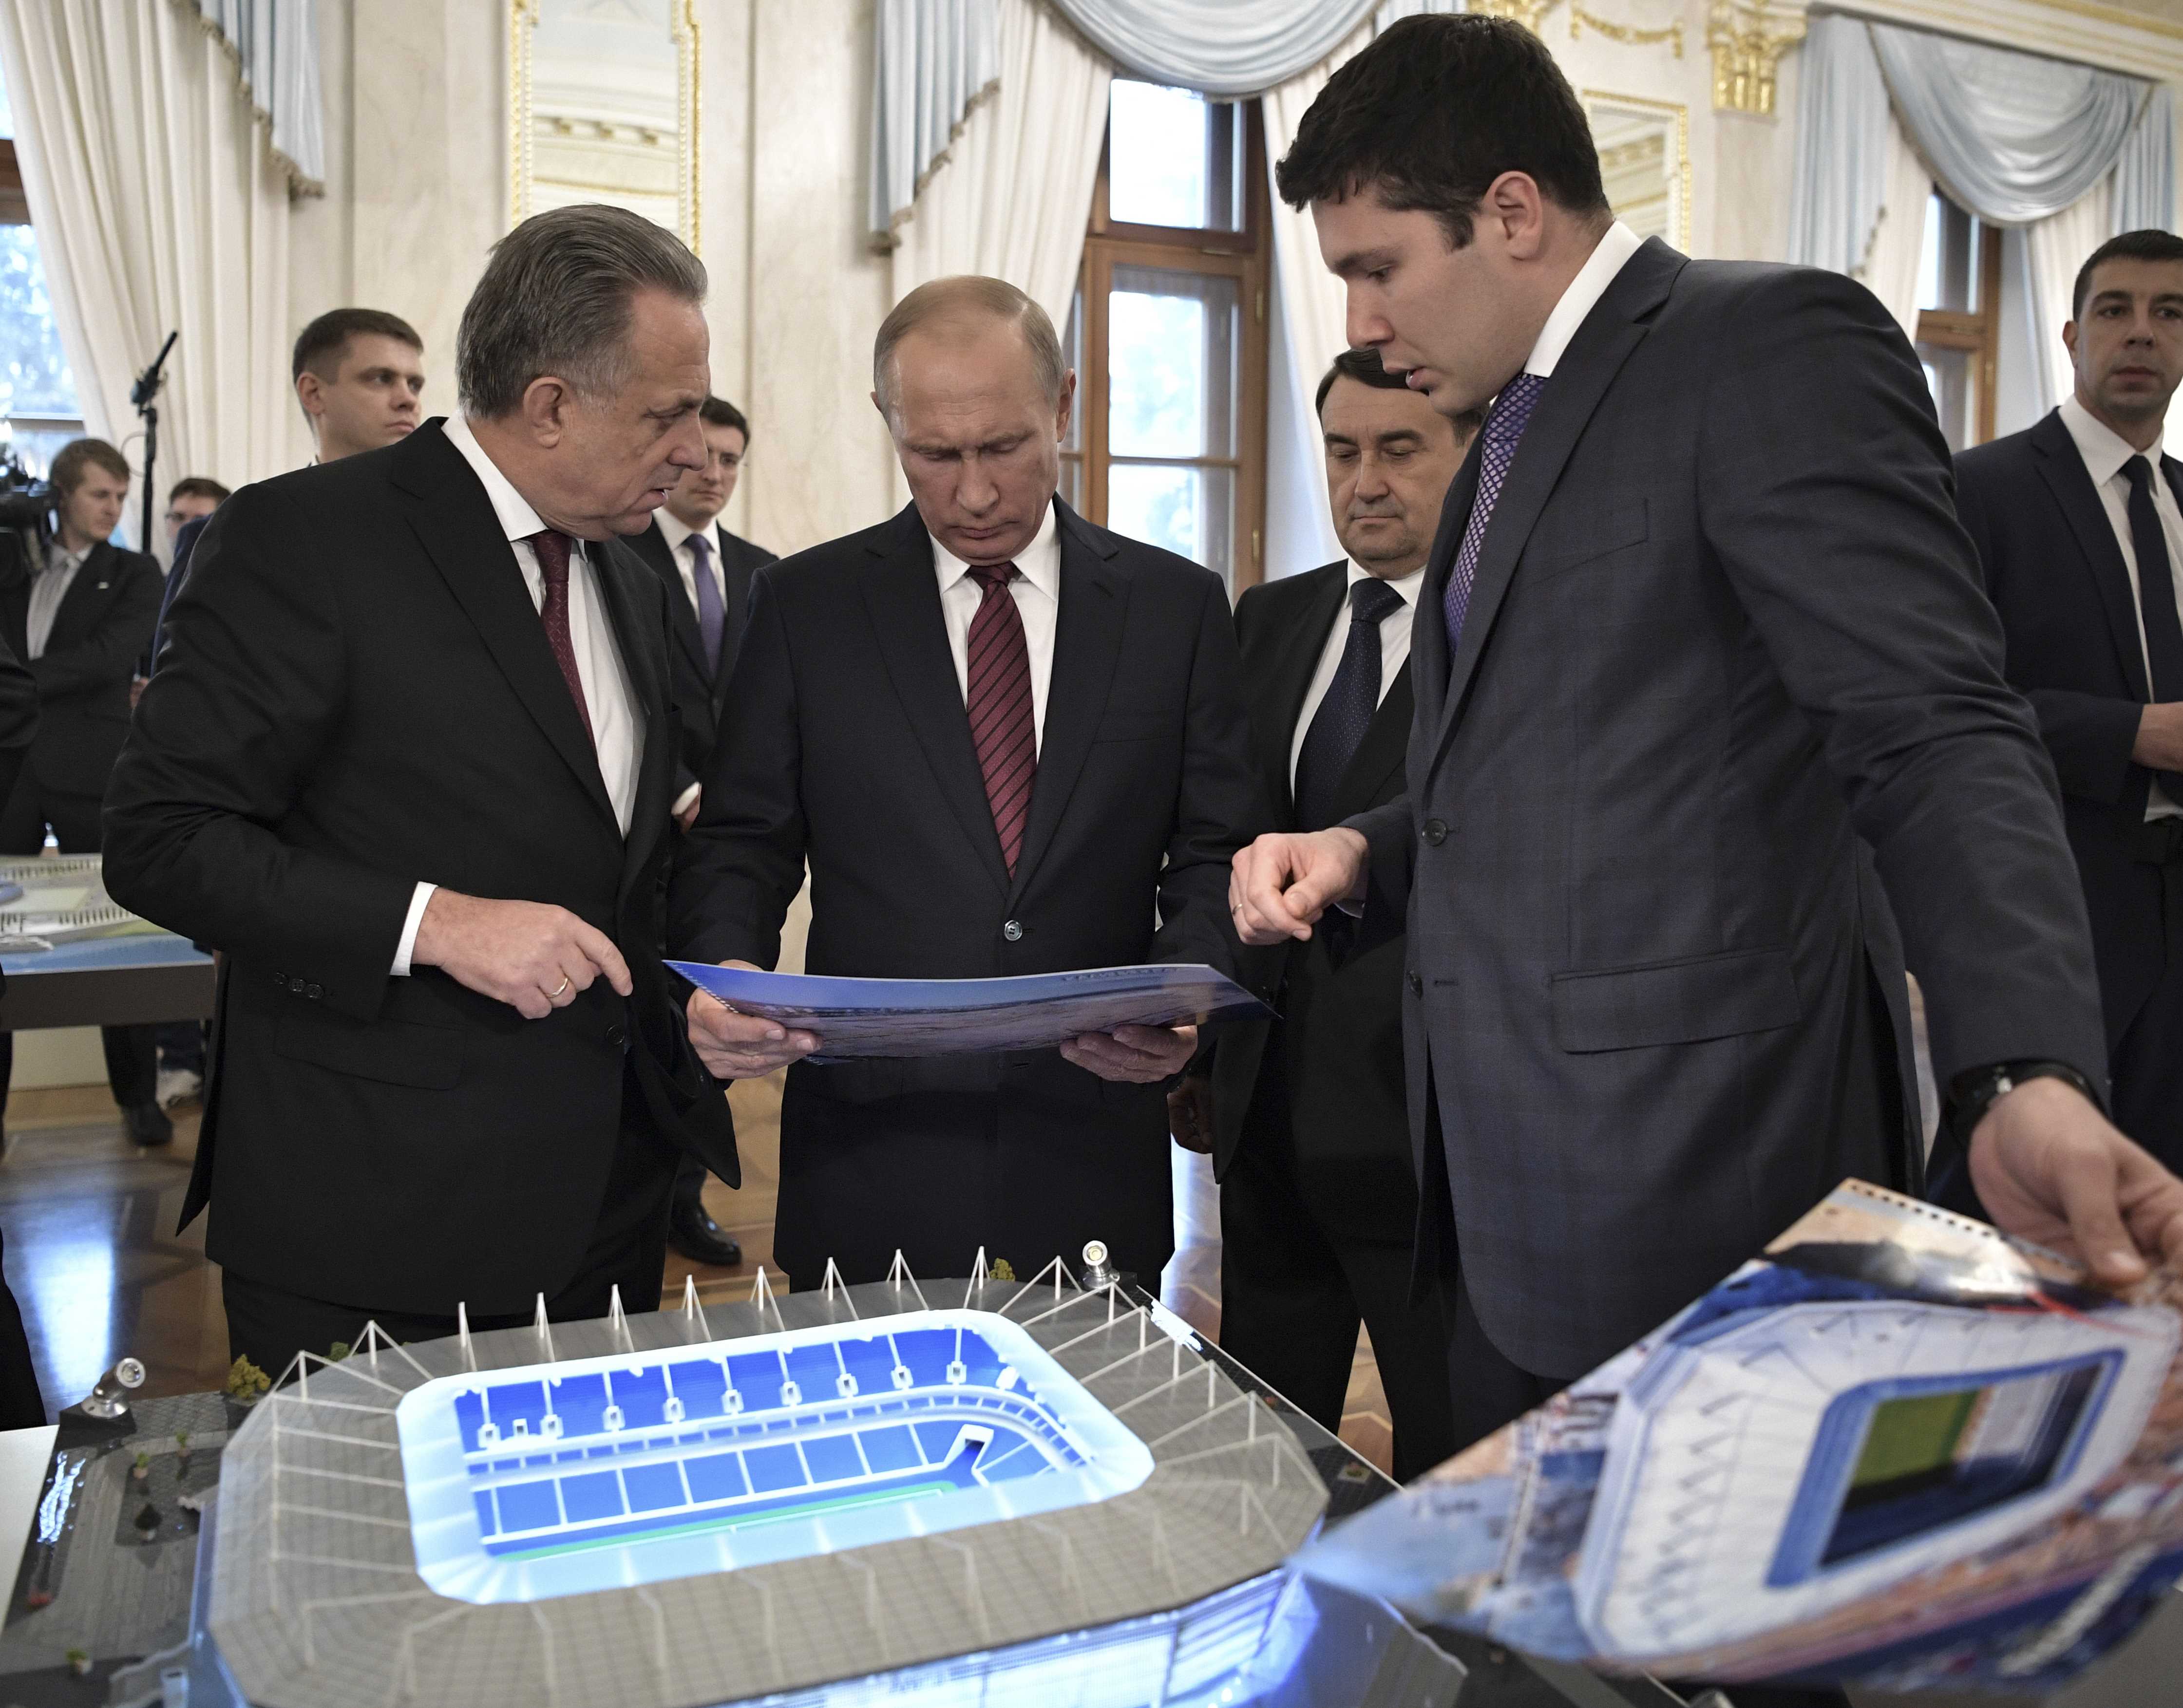 Football: 2018 World Cup venues on track despite delays, says Putin